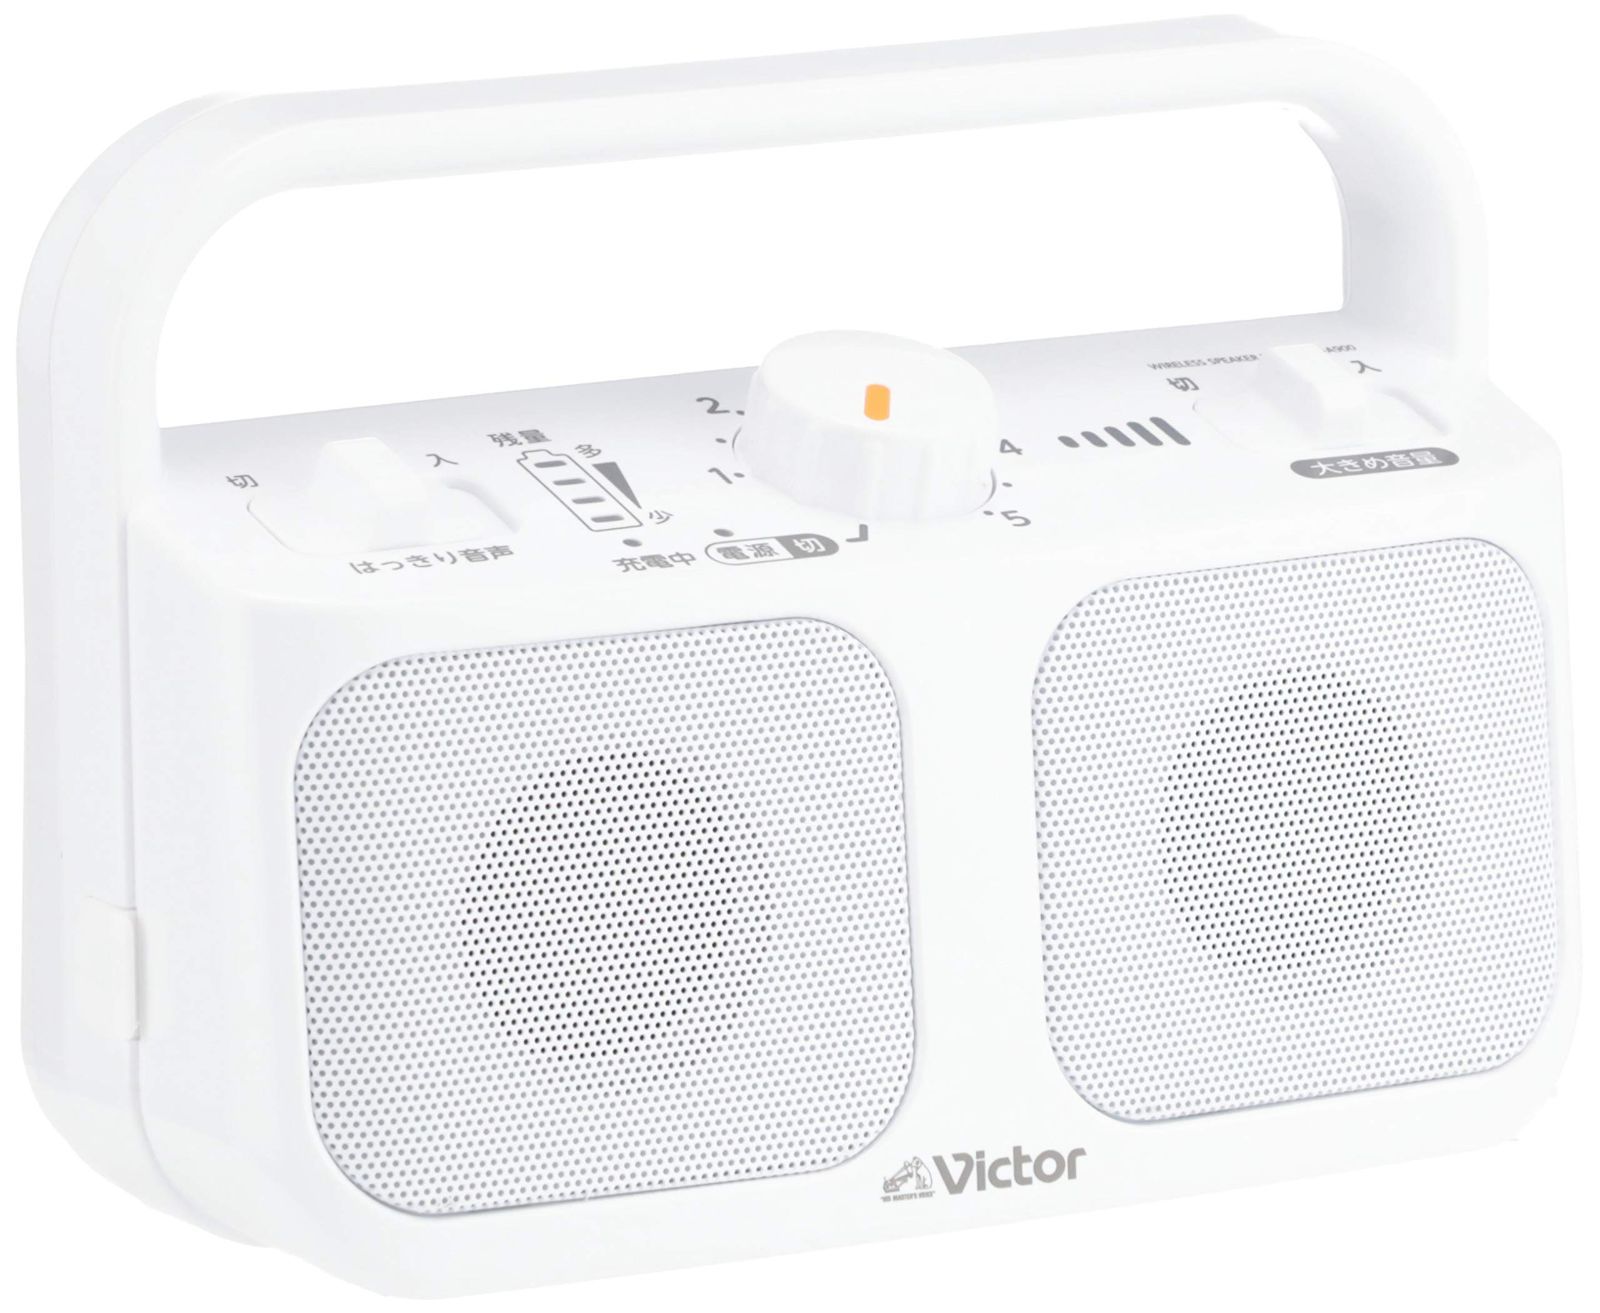 JVCケンウッド Victor SP-A900-W 手元テレビスピーカー